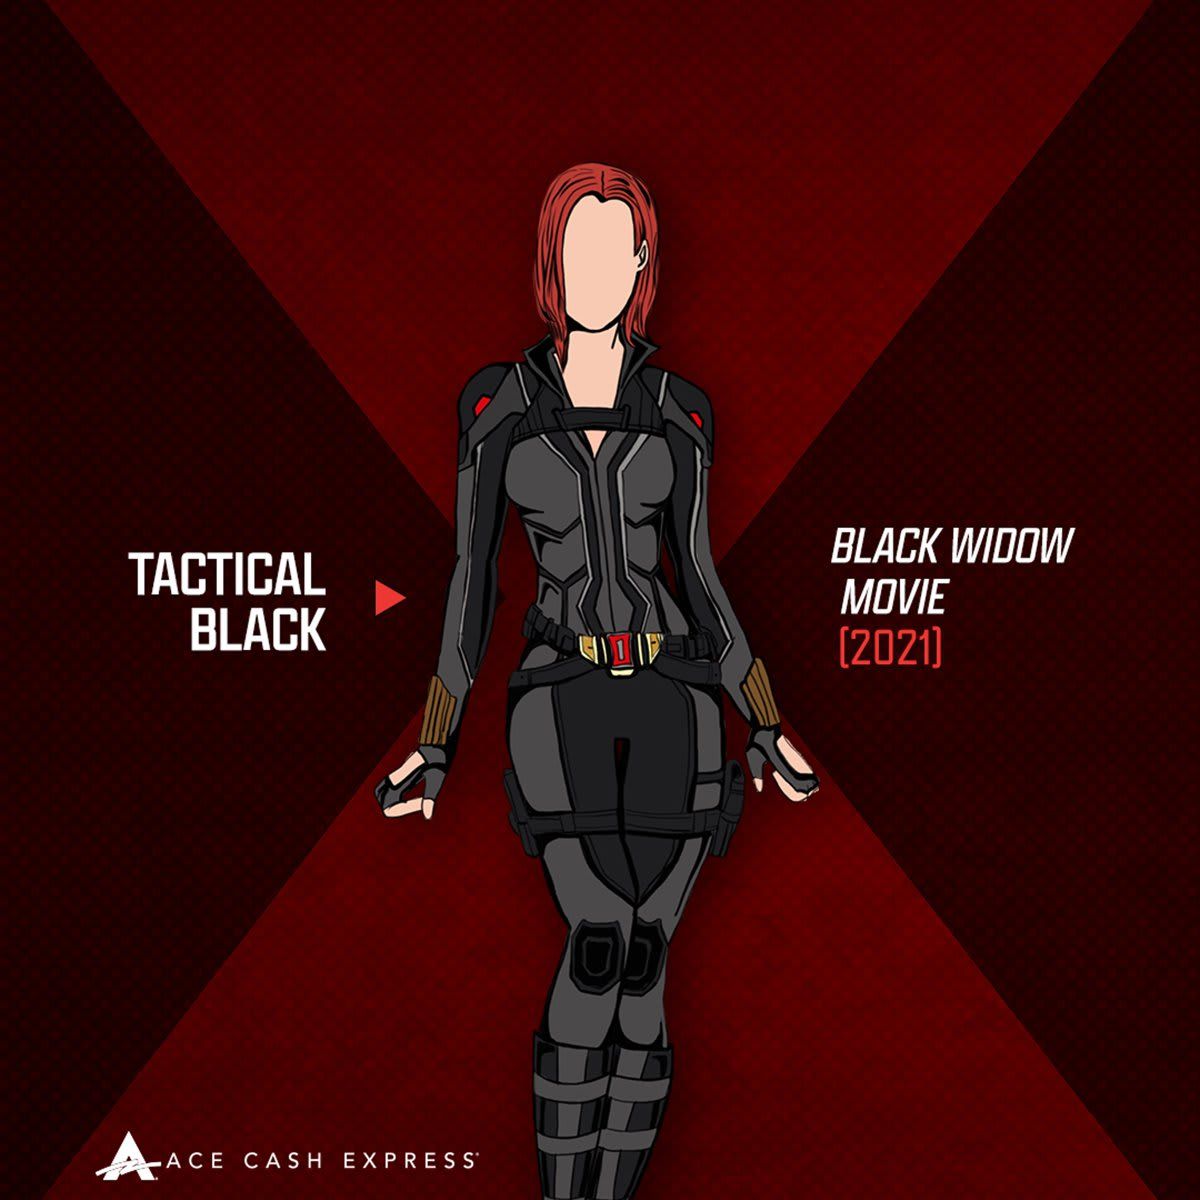 Tactical Black (Black Widow Movie)